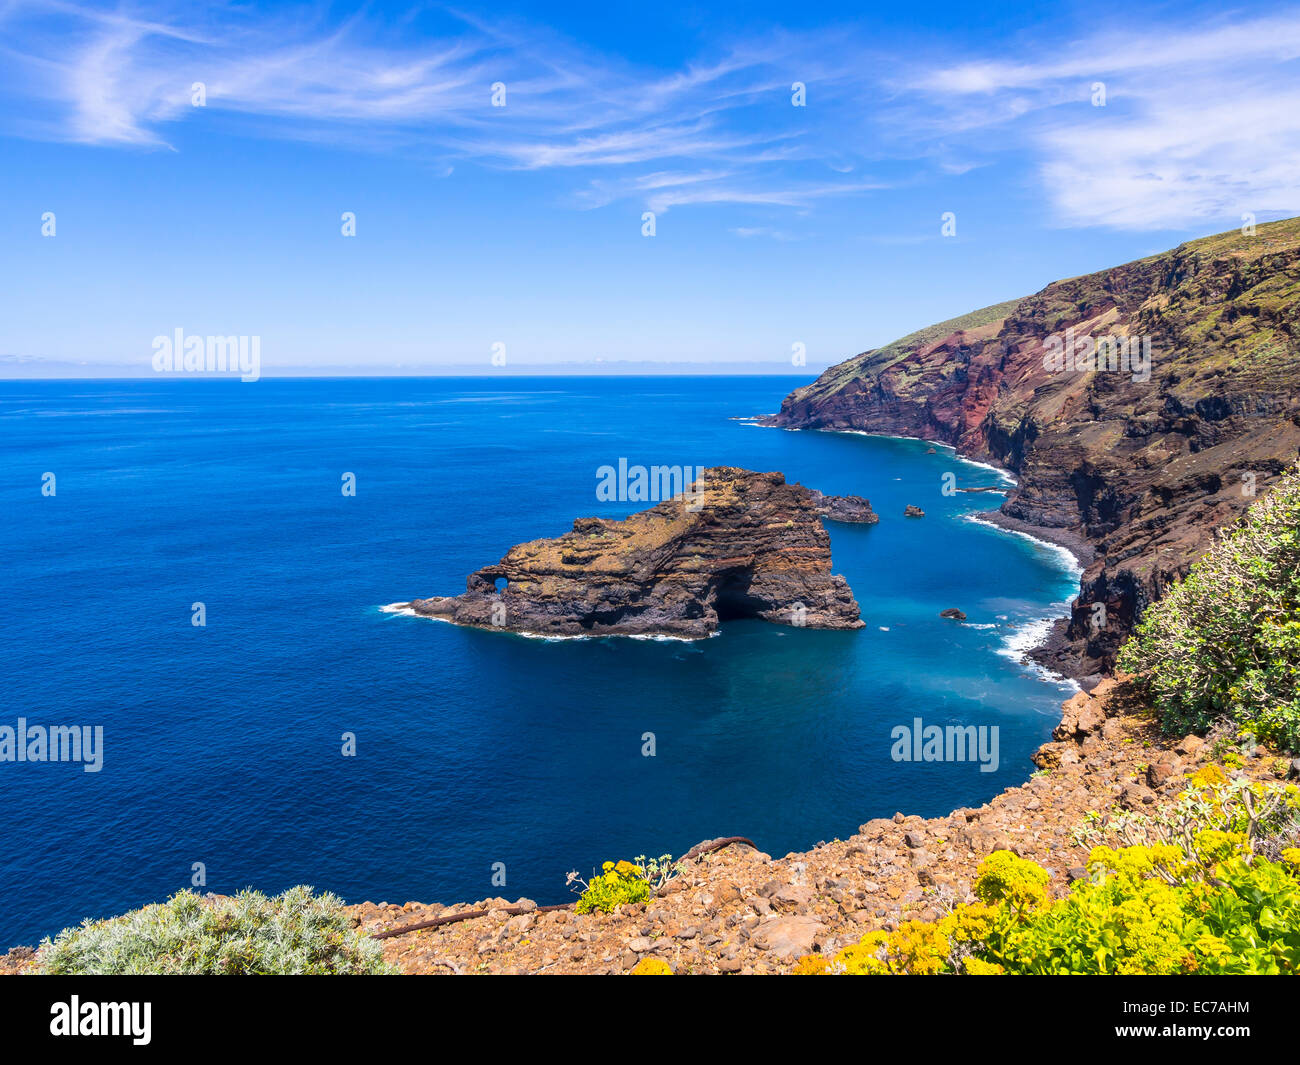 Spain, Canary Islands, La Palma, cliff coast at Garafia Stock Photo